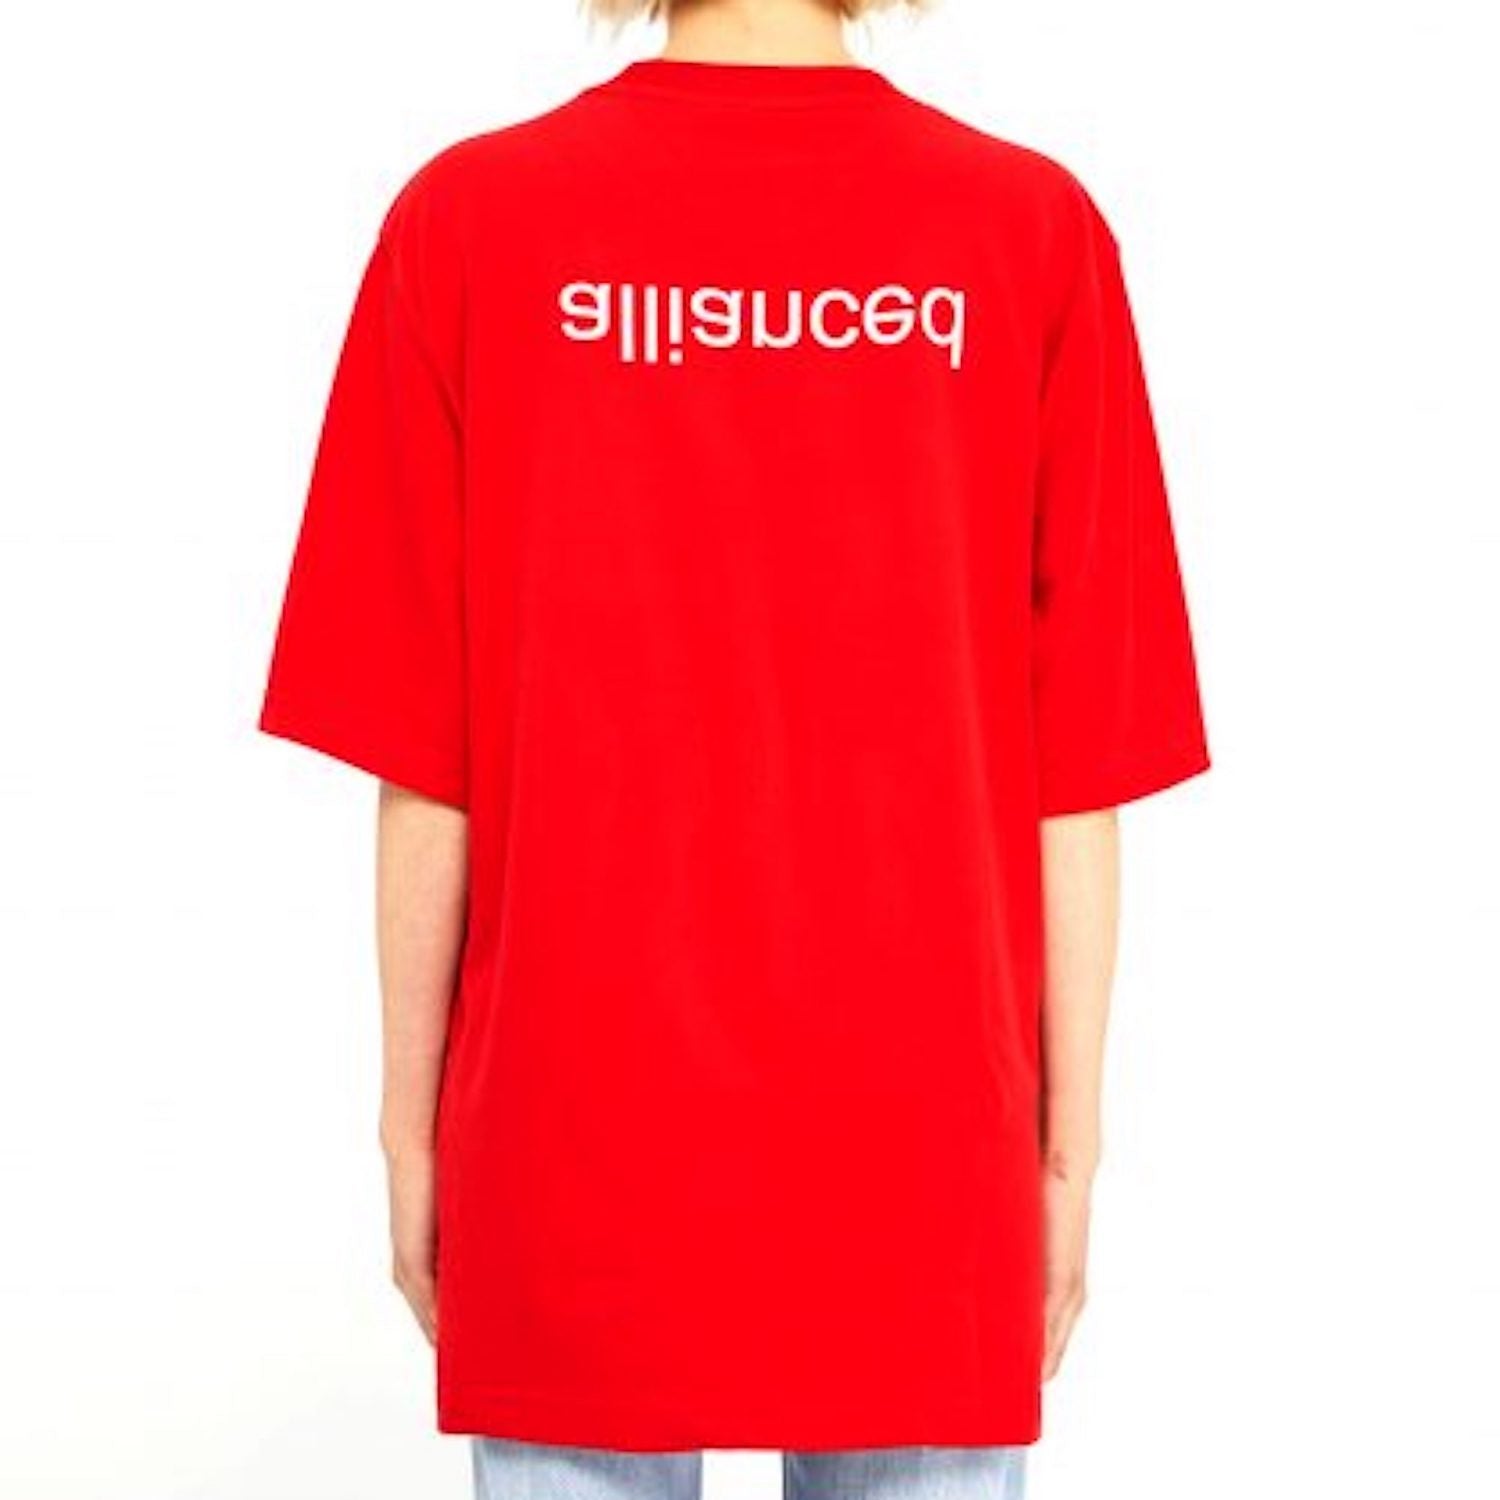 Privé Alliance Women's Mirrored Allianced T-shirt Red